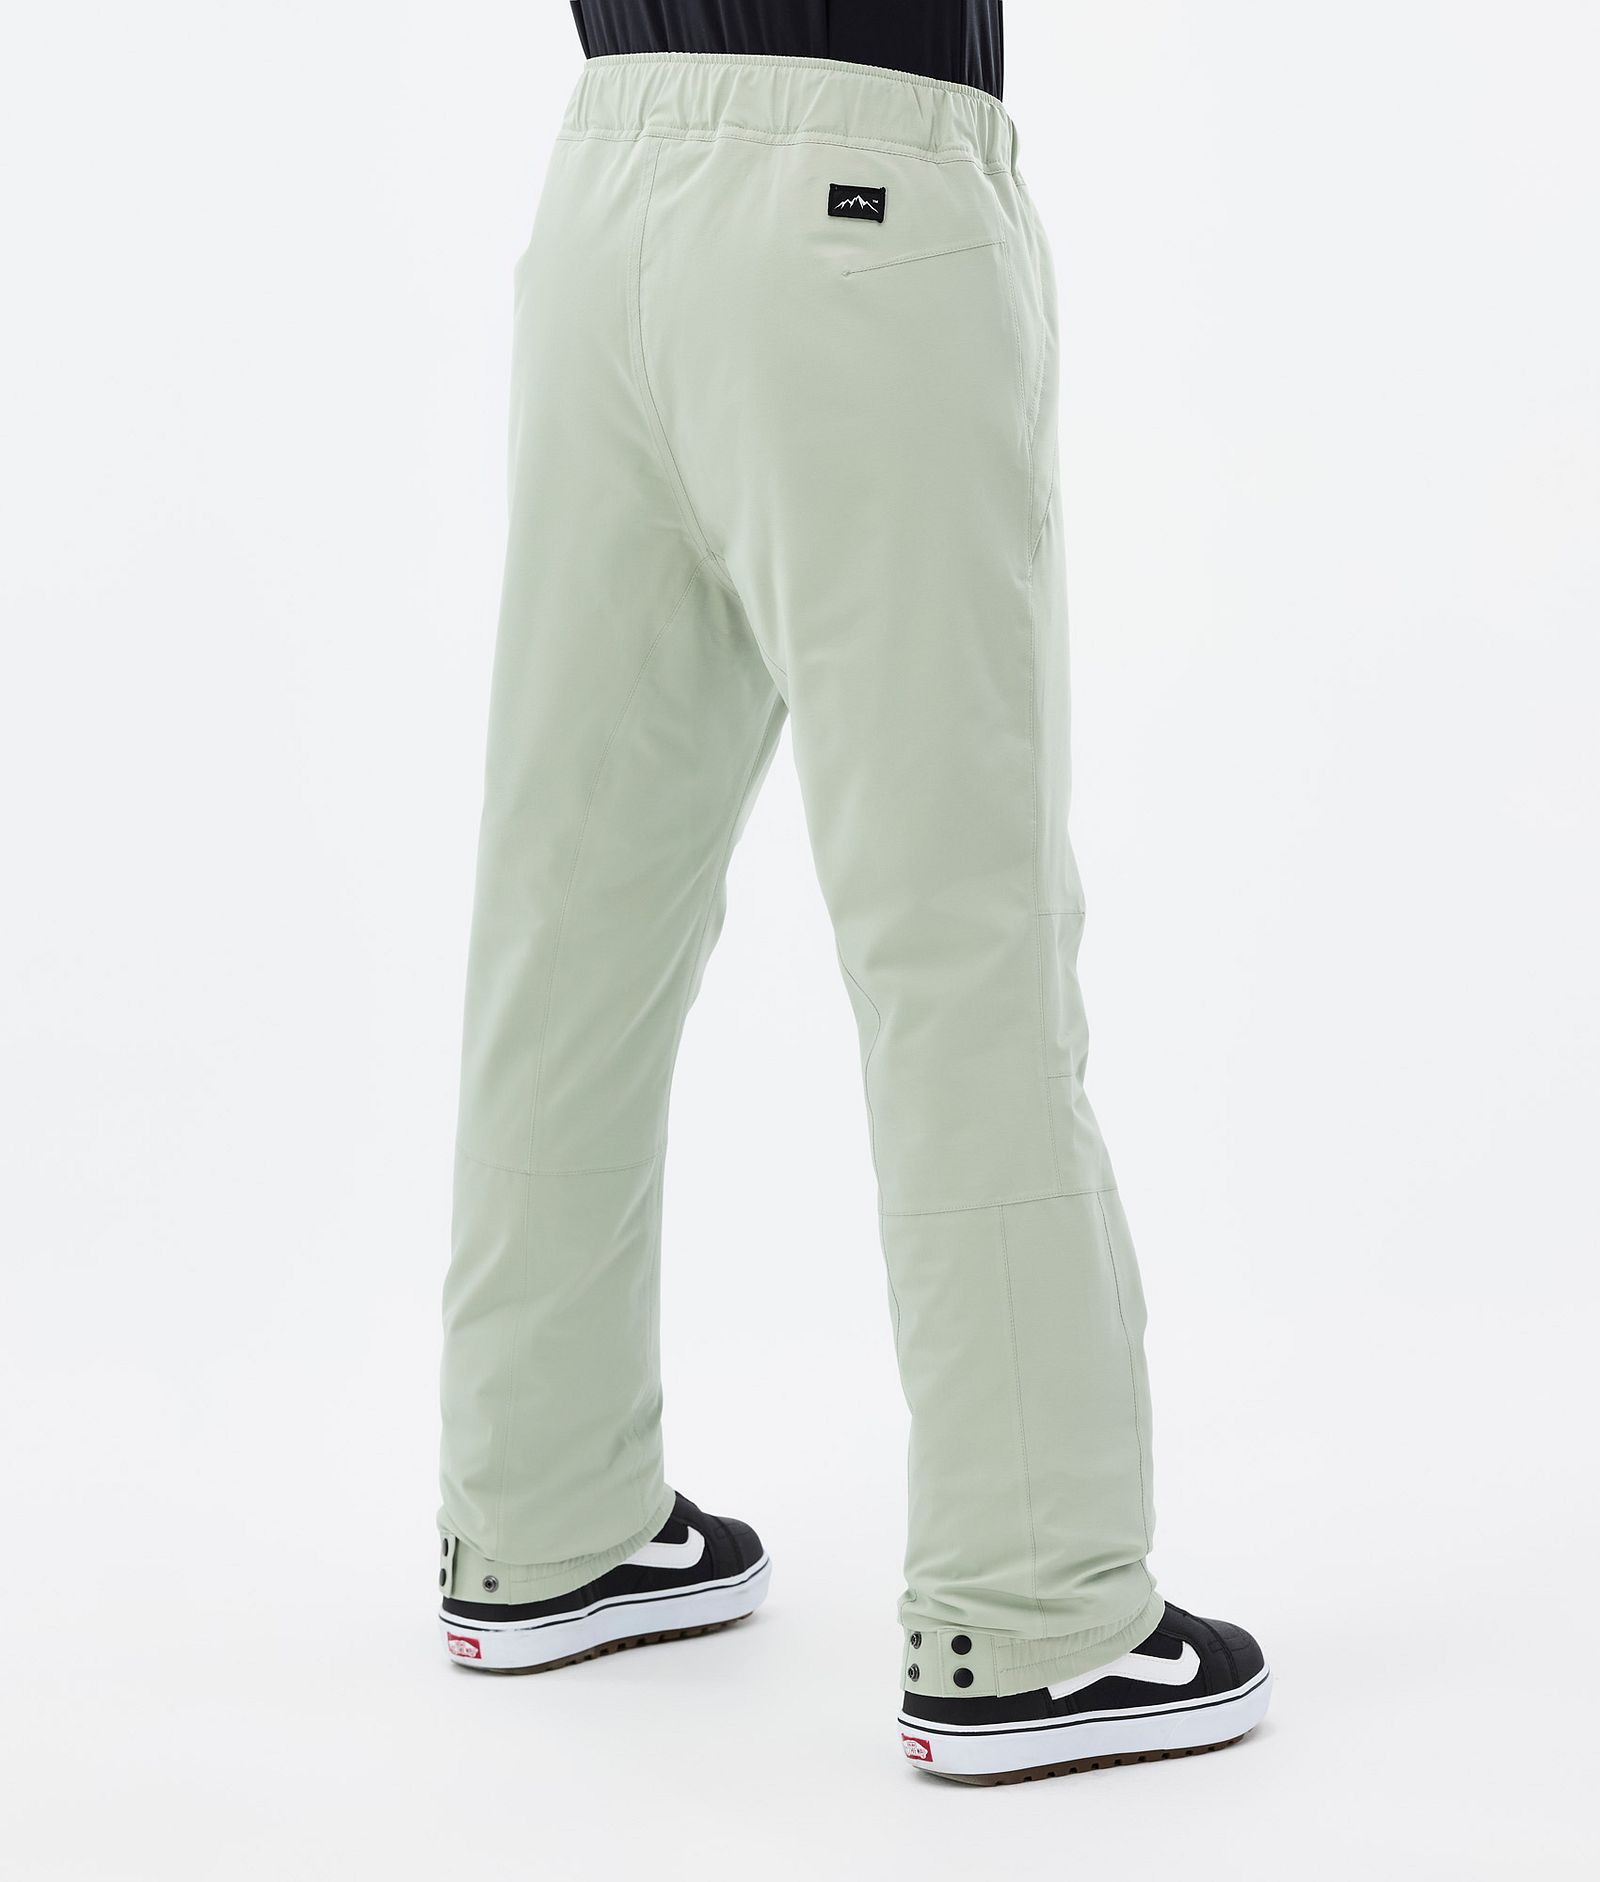 Blizzard W 2022 Pantalon de Snowboard Femme Soft Green